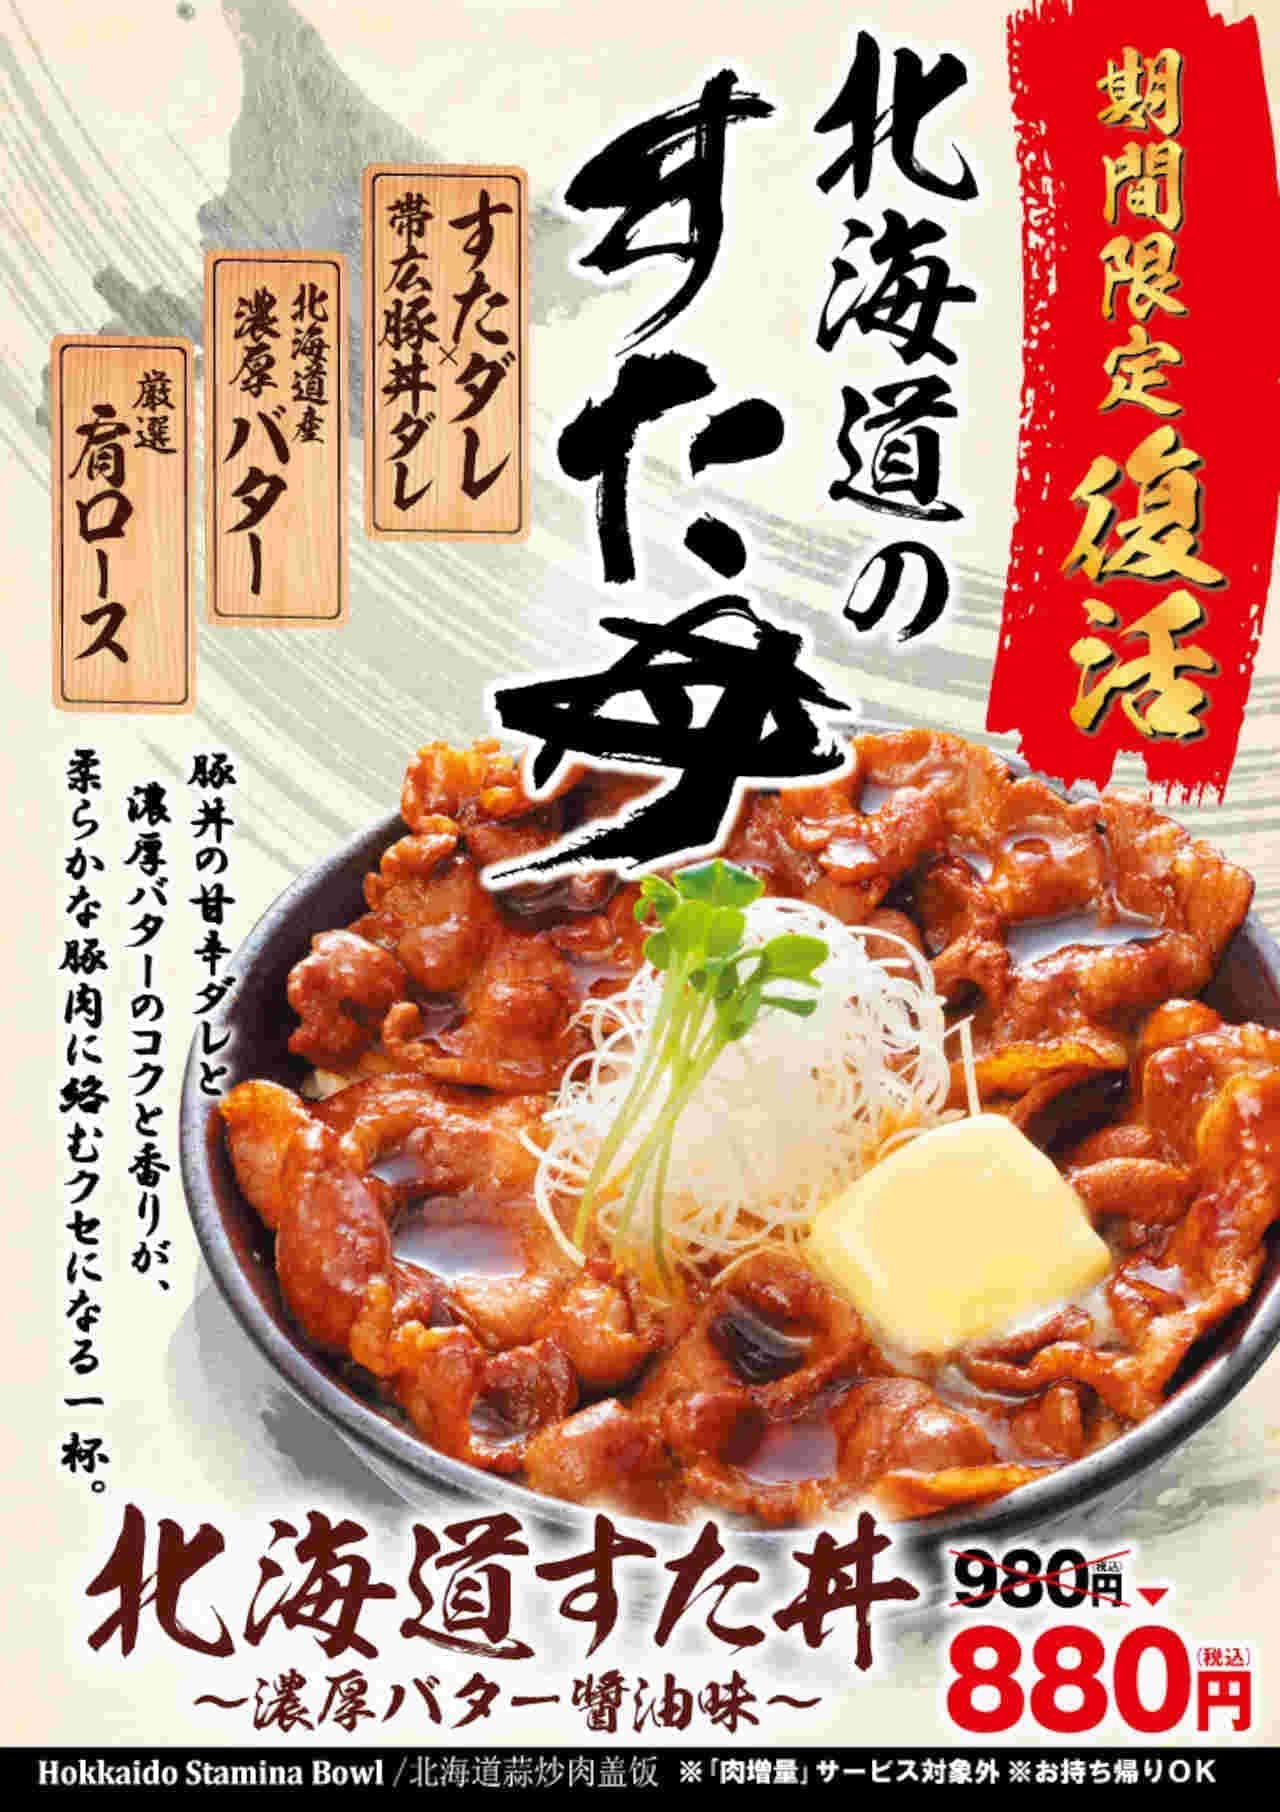 Legendary Suta Donburi "Hokkaido Suta Don" "Fried Fried Rice Bowl Hokkaido Suta Don" "Big Do" Suta Don